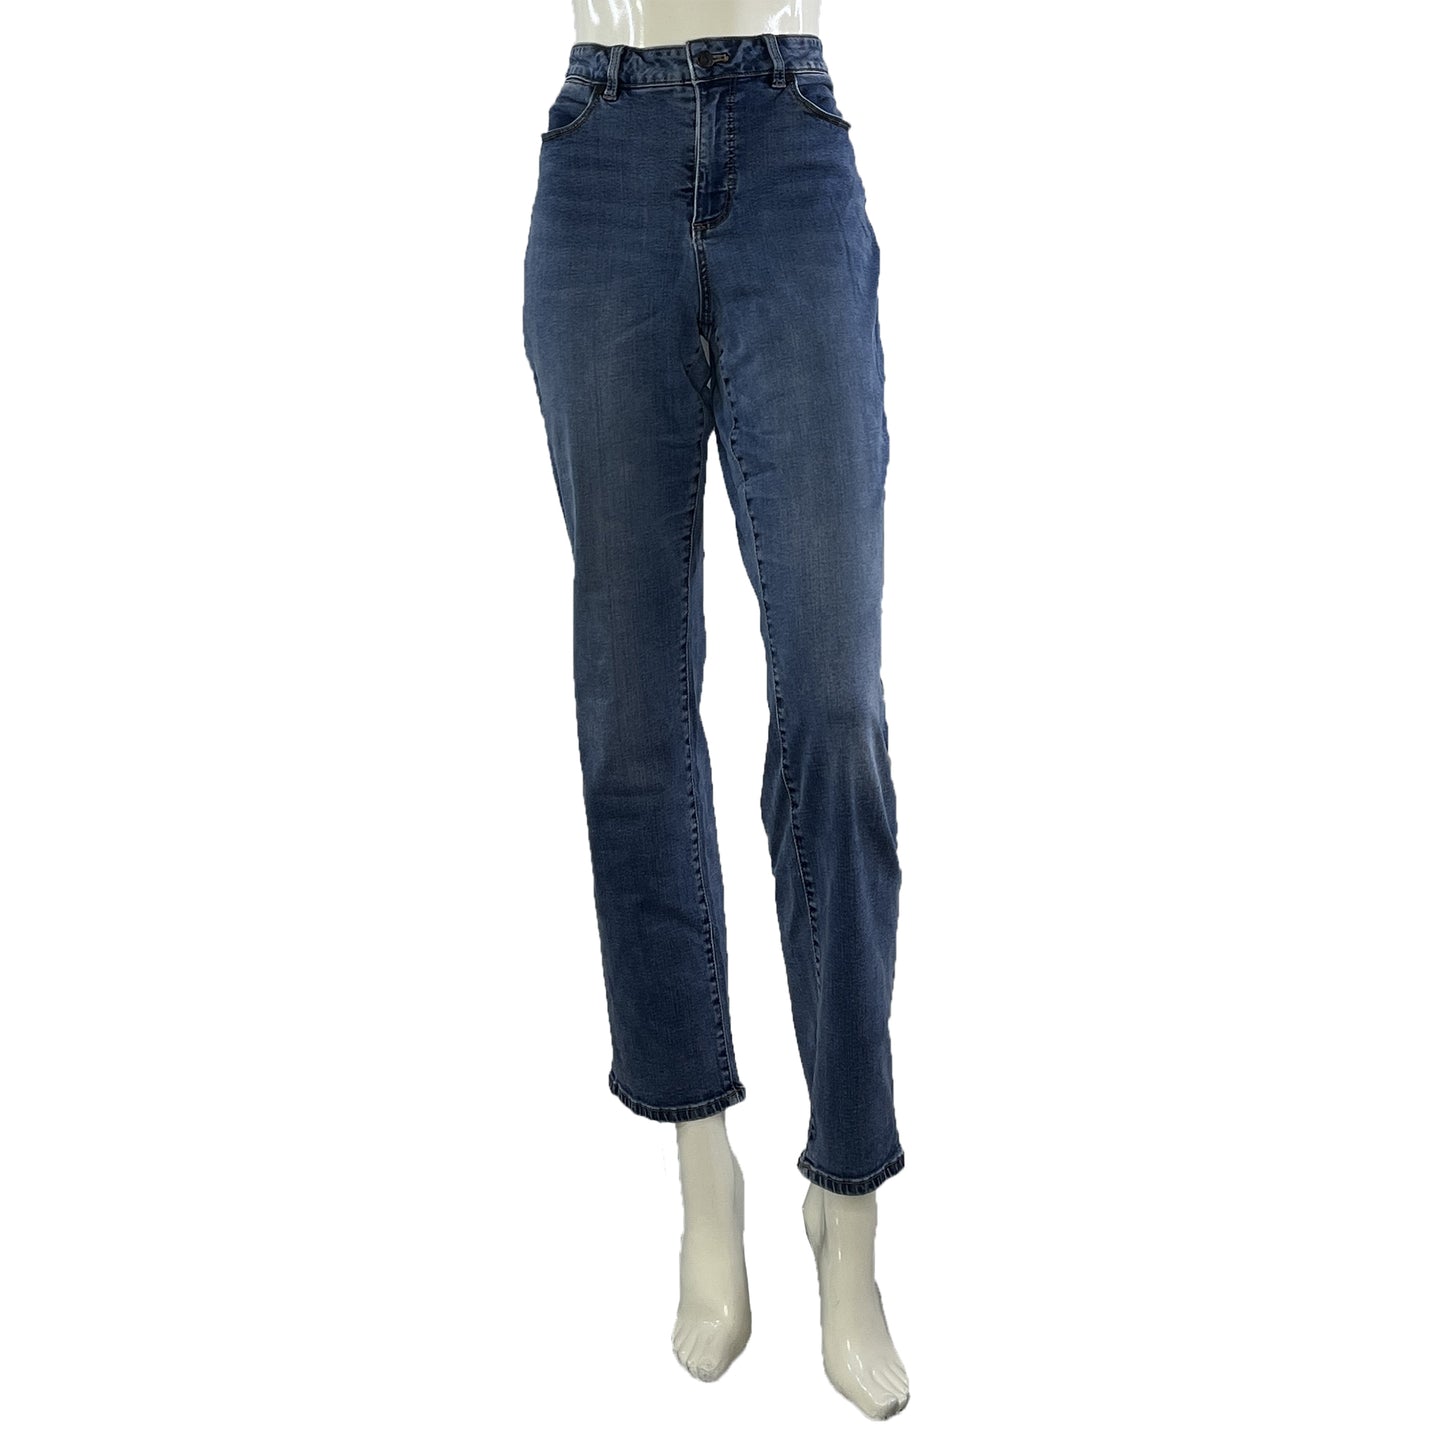 Talbots Denim Jeans Medium Blue Size 12 SKU 000328-8